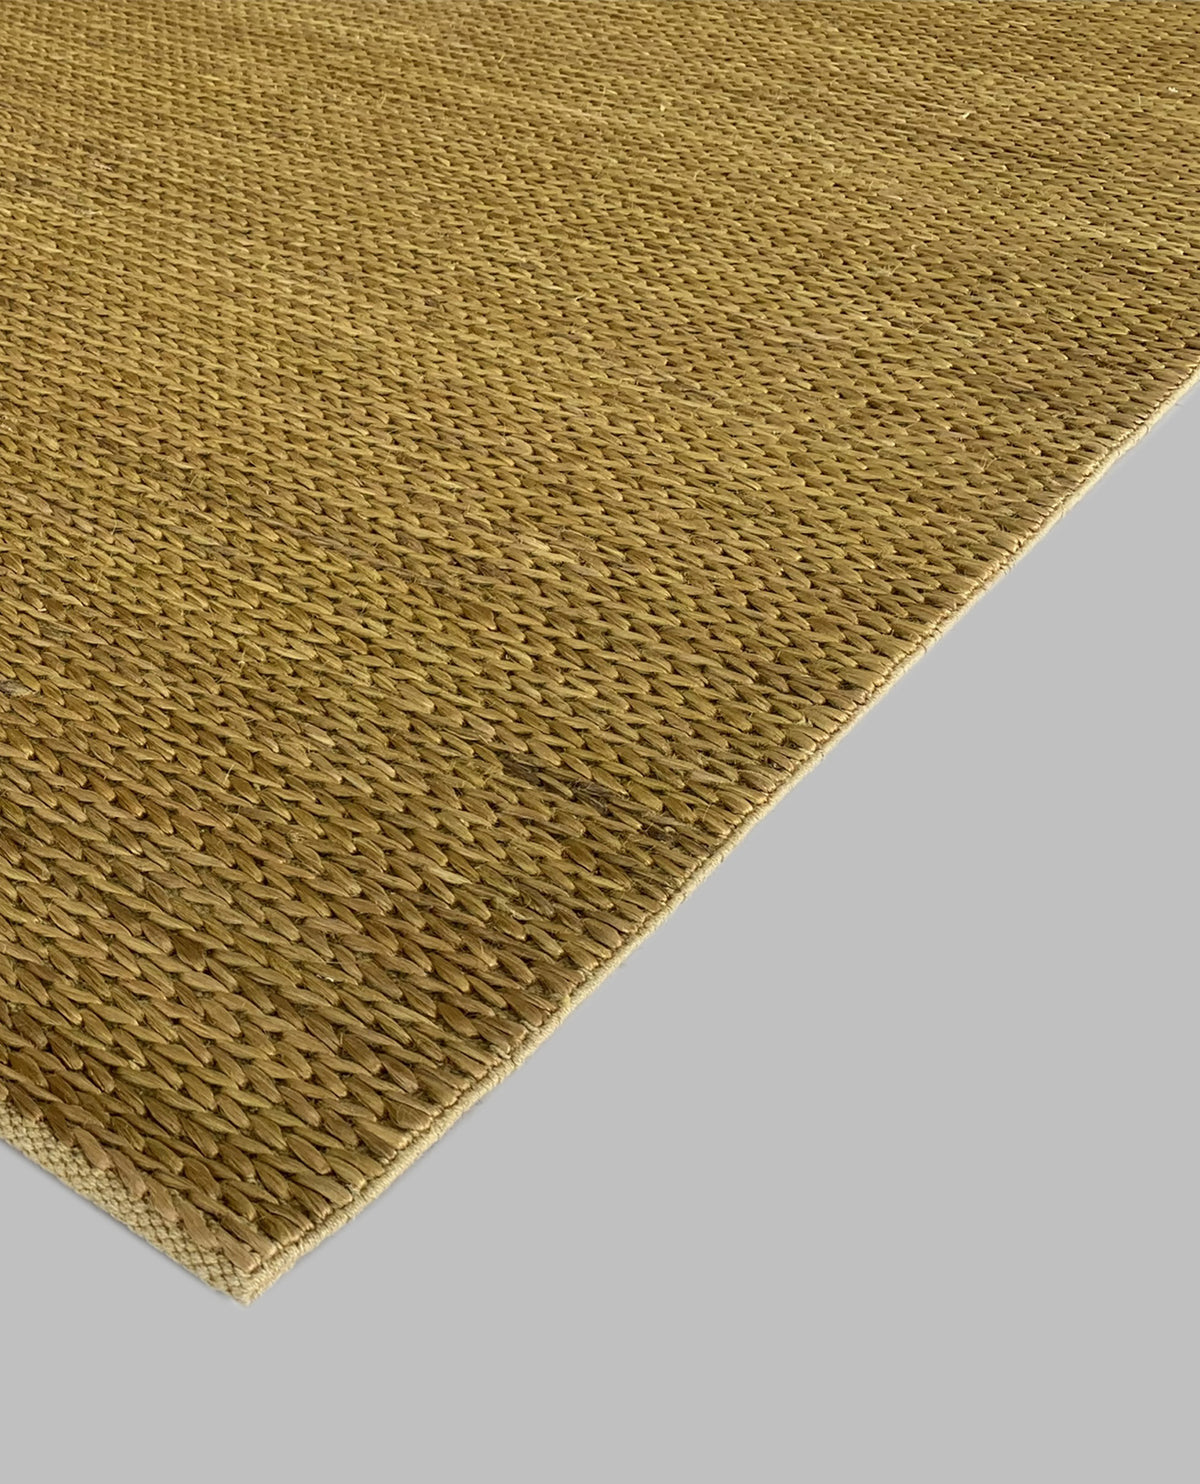 Rugslane Gold Jute Carpet 5.0ft X 8.0ft